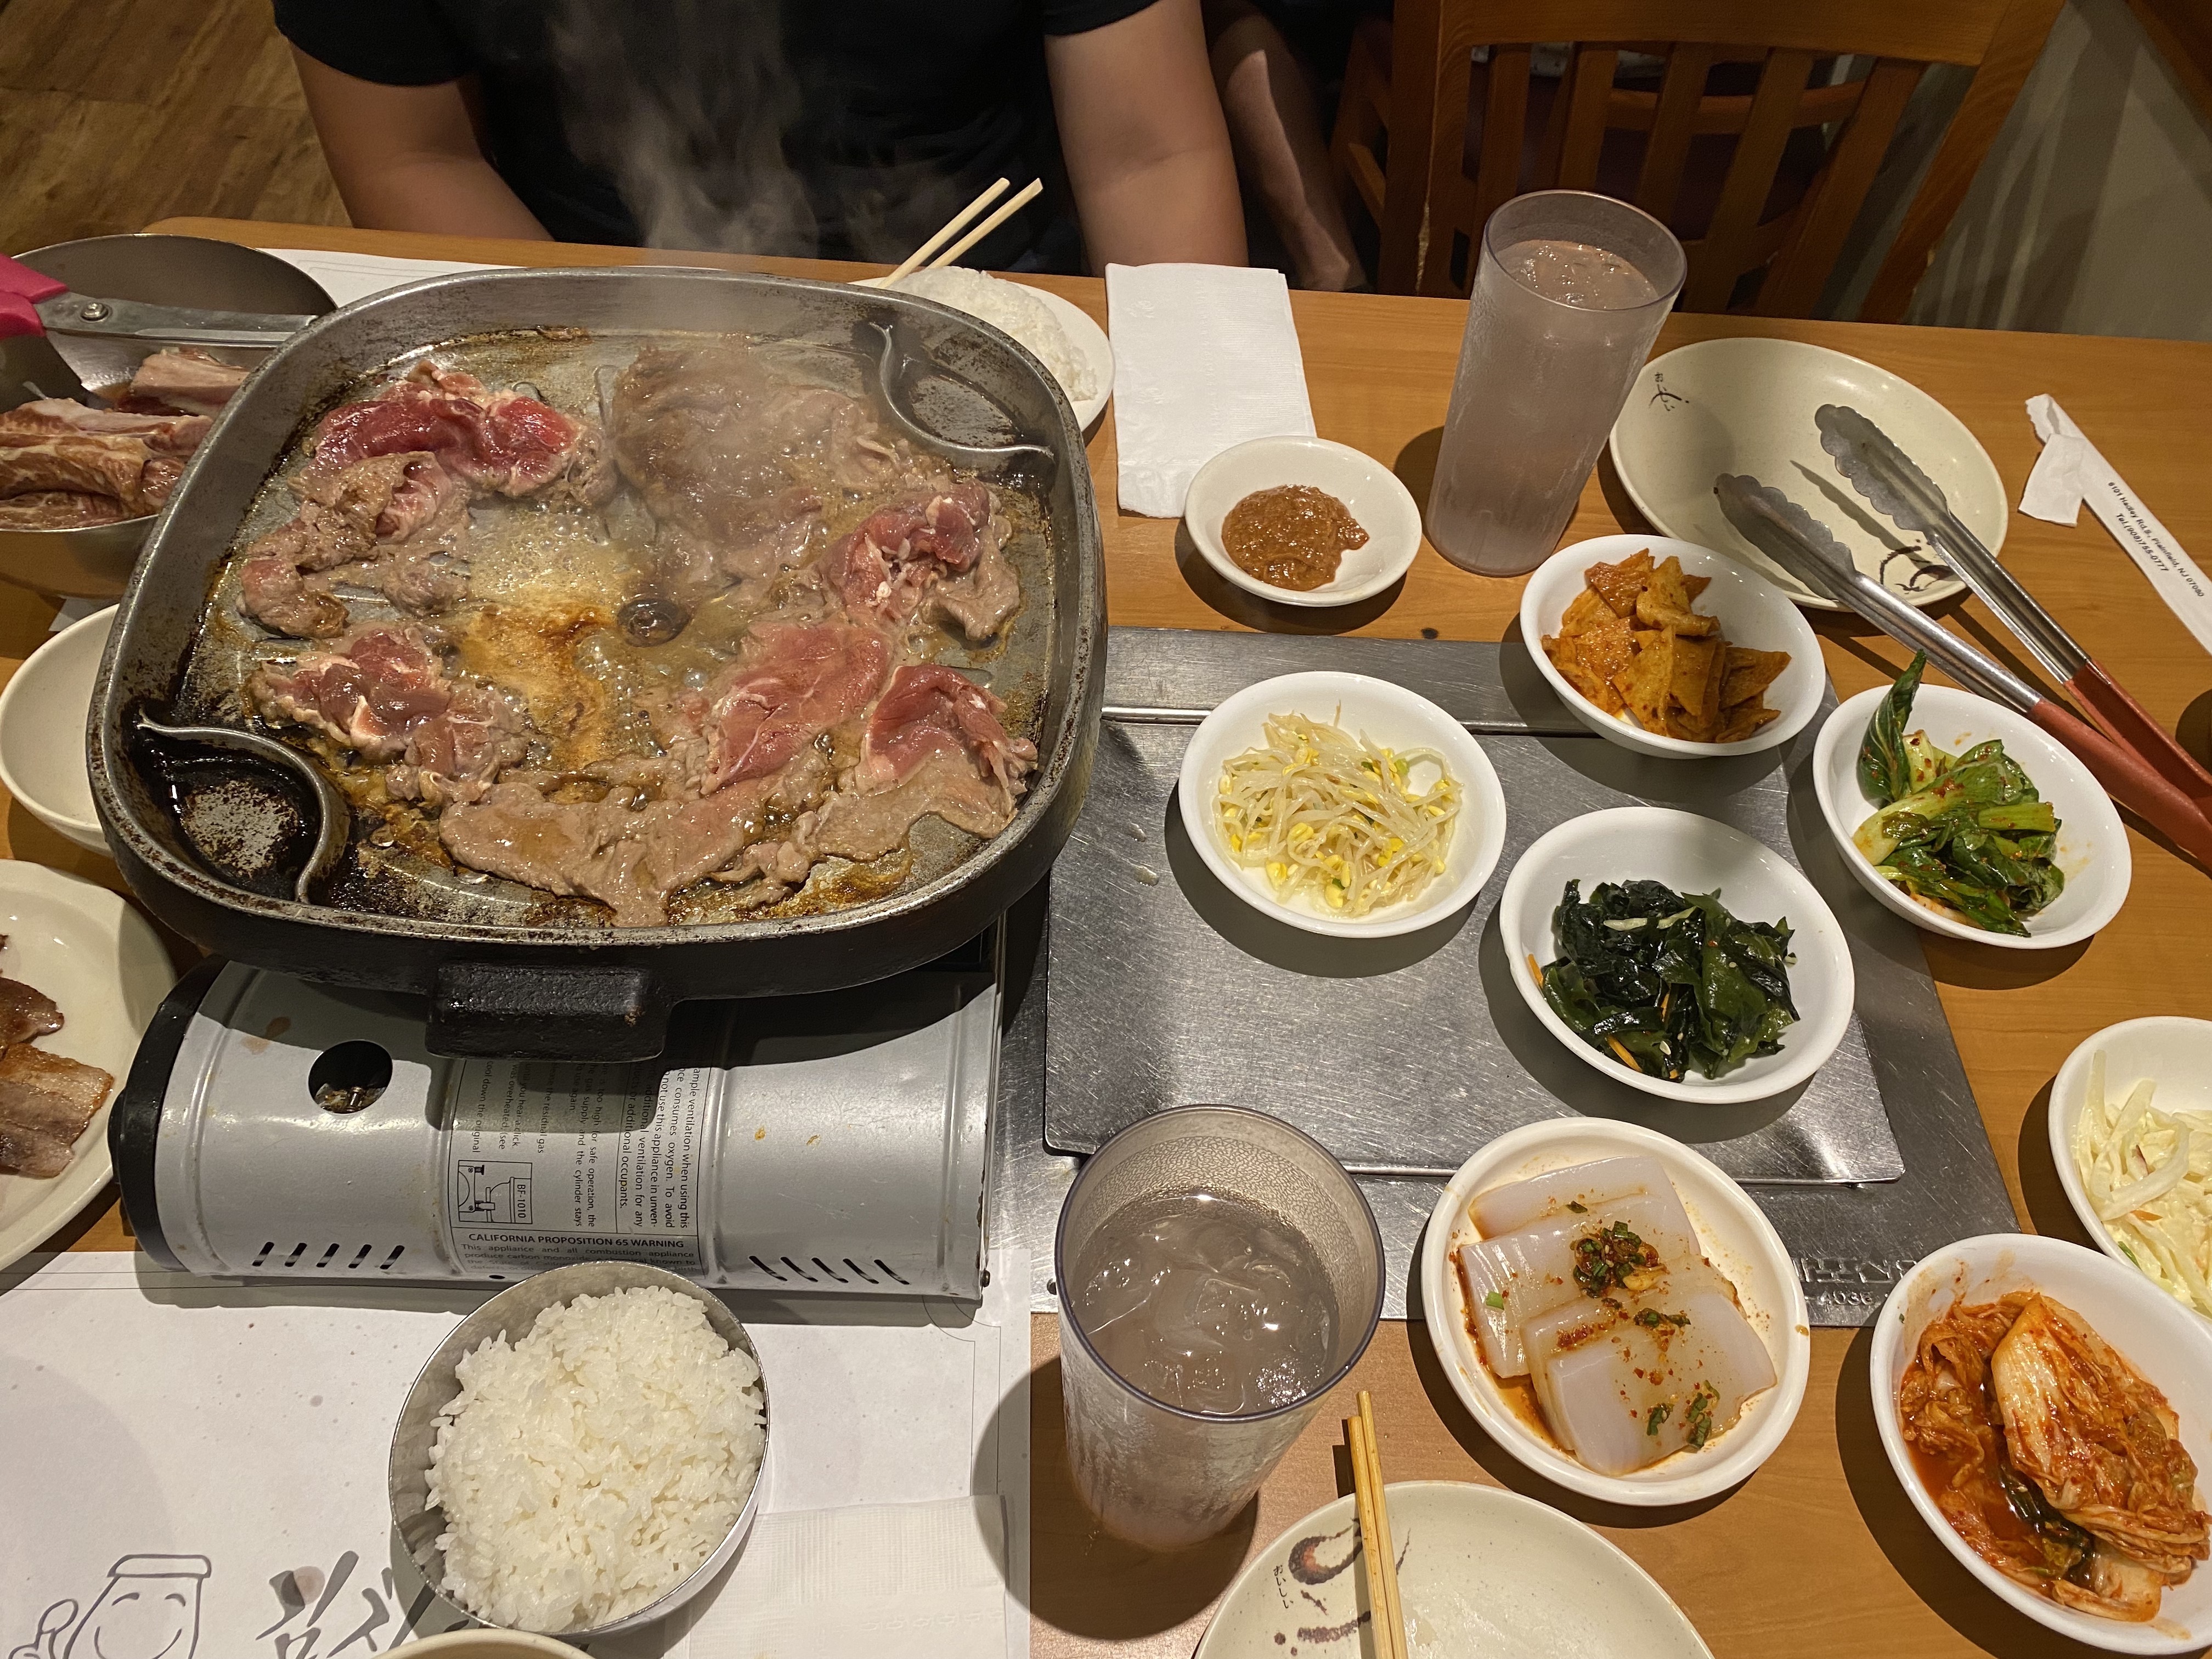 The 10 Best Korean and Japanese Restaurants for Grilling Your Own Dinner